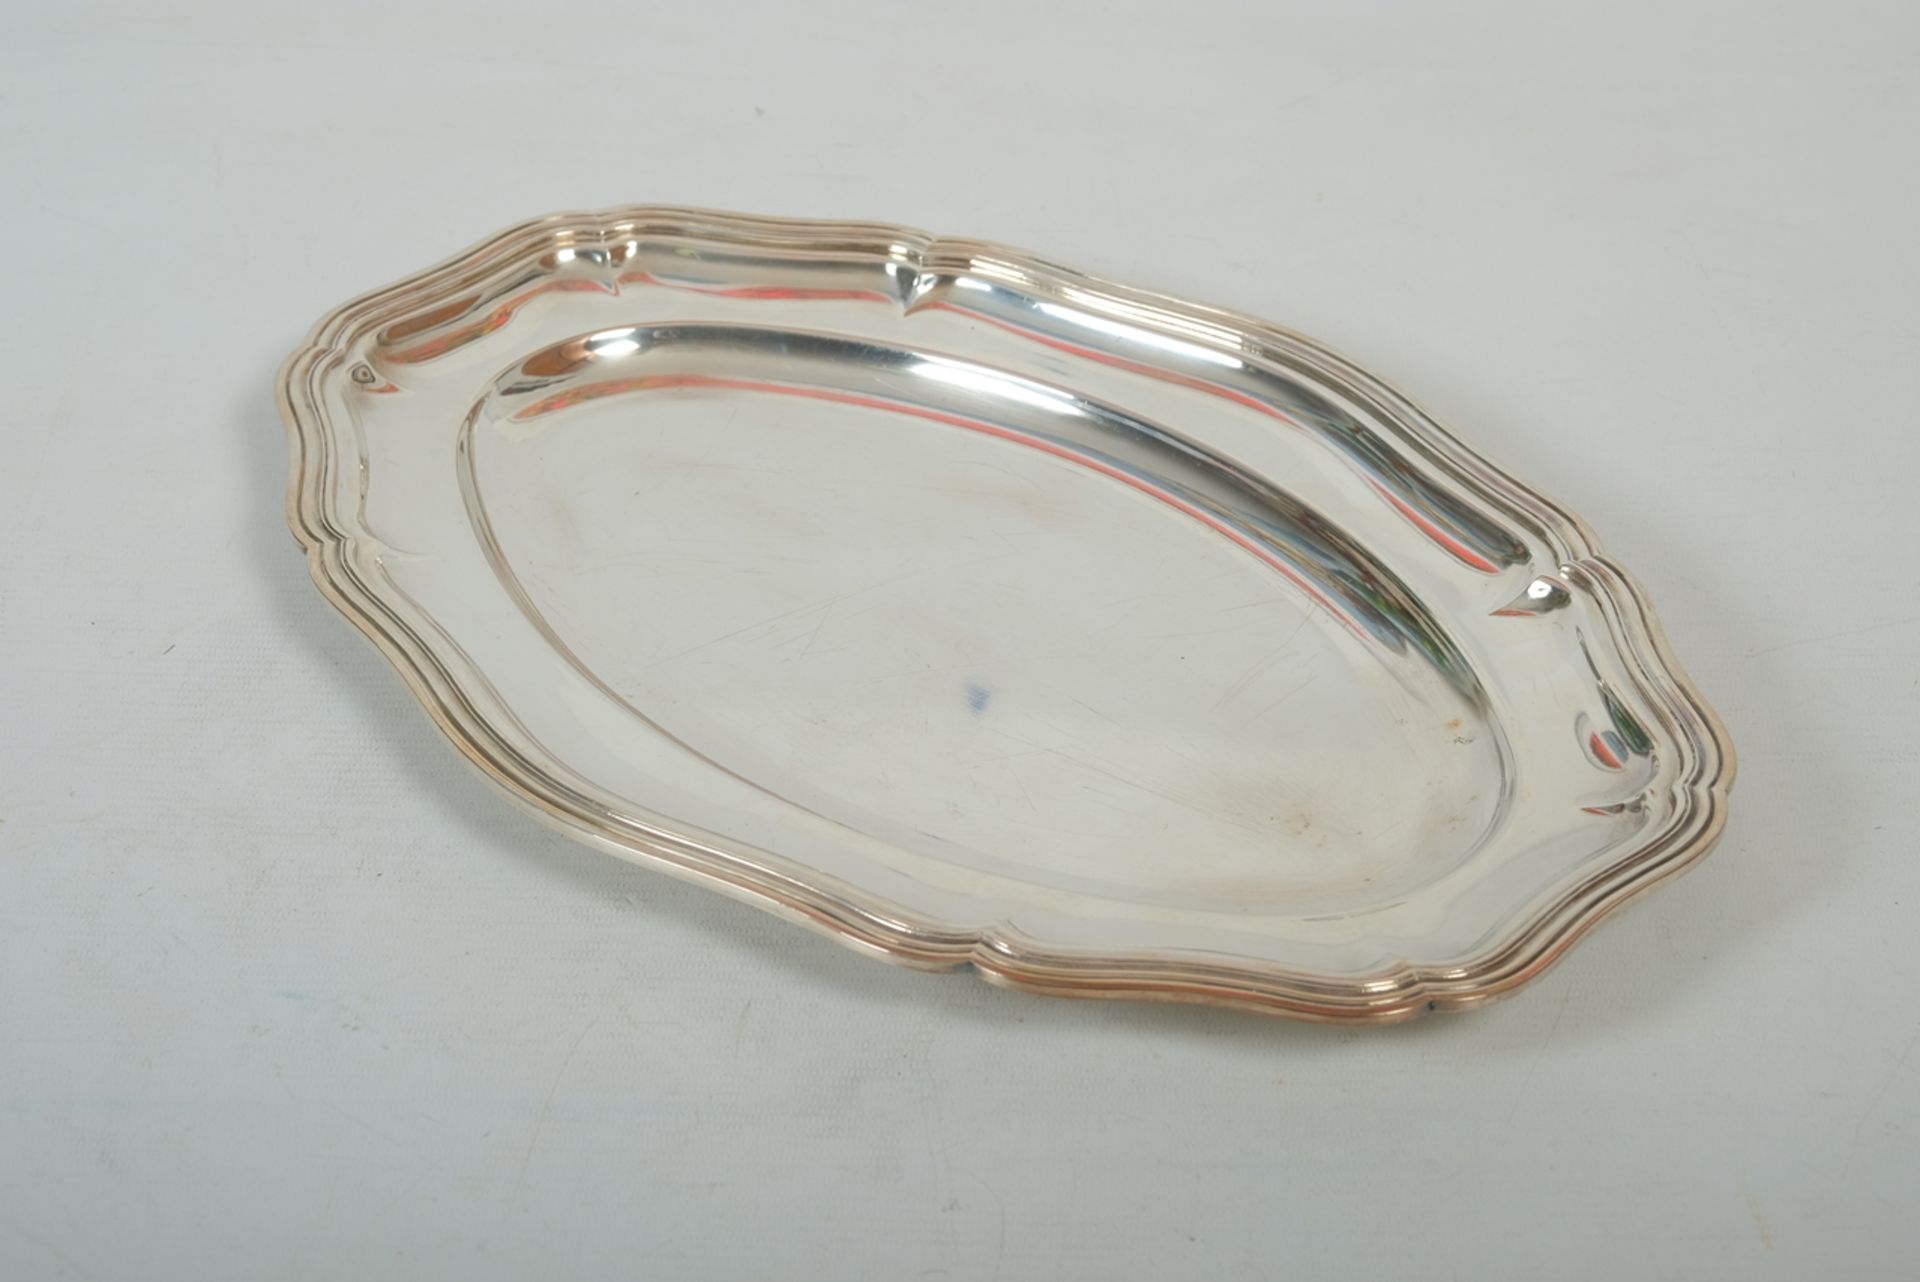 Vorlegeplatte, ovale Form, Länge 41 cm.